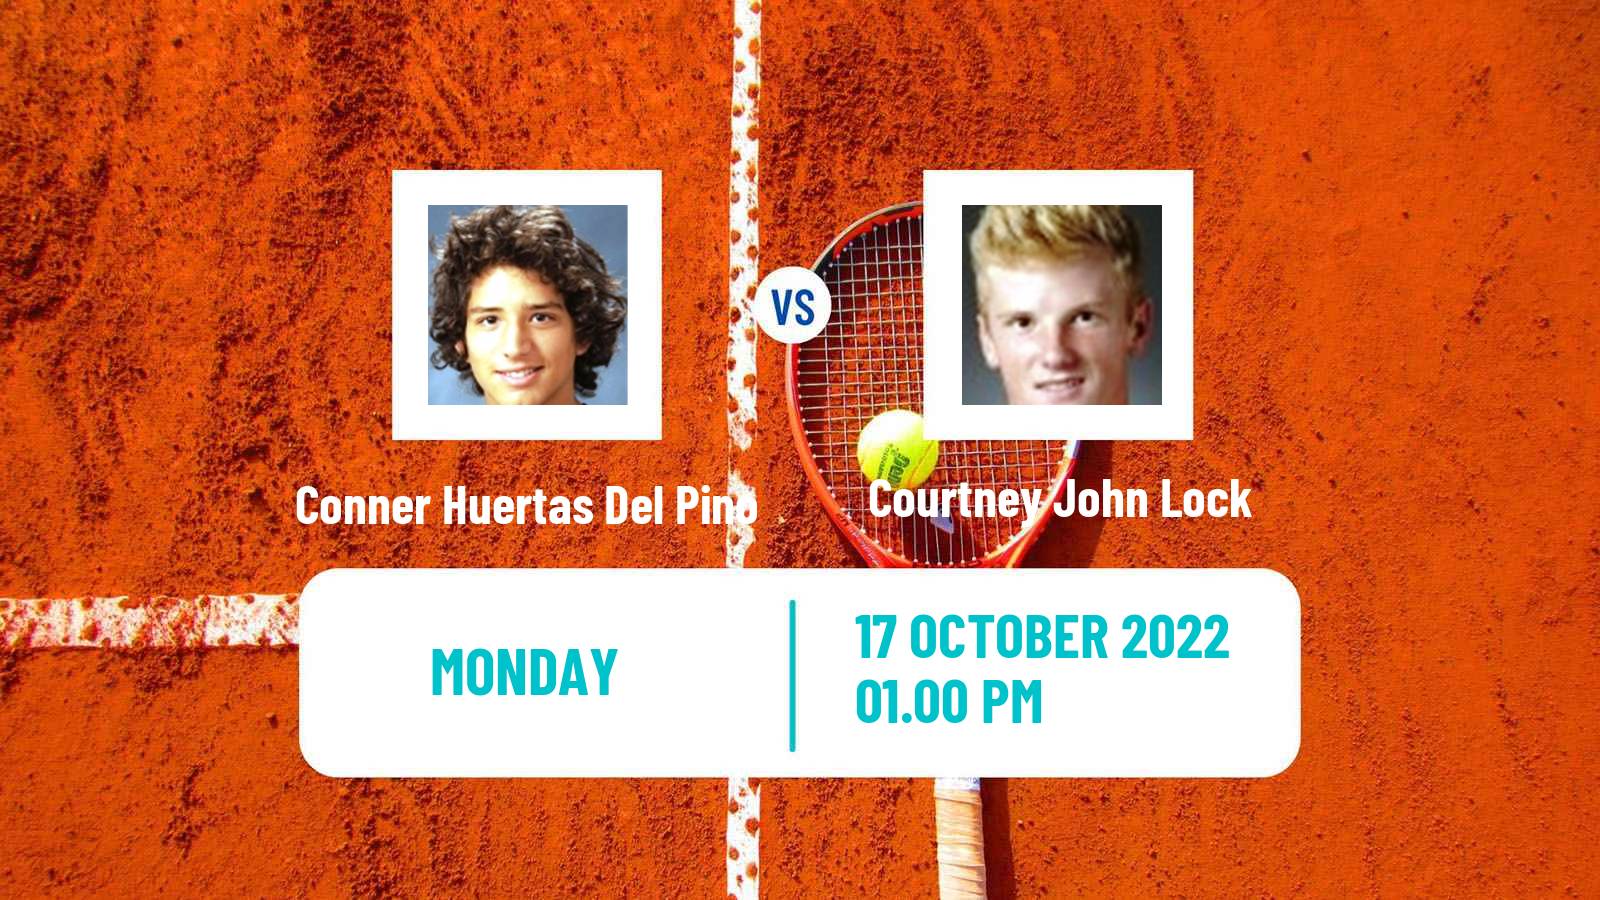 Tennis ATP Challenger Conner Huertas Del Pino - Courtney John Lock